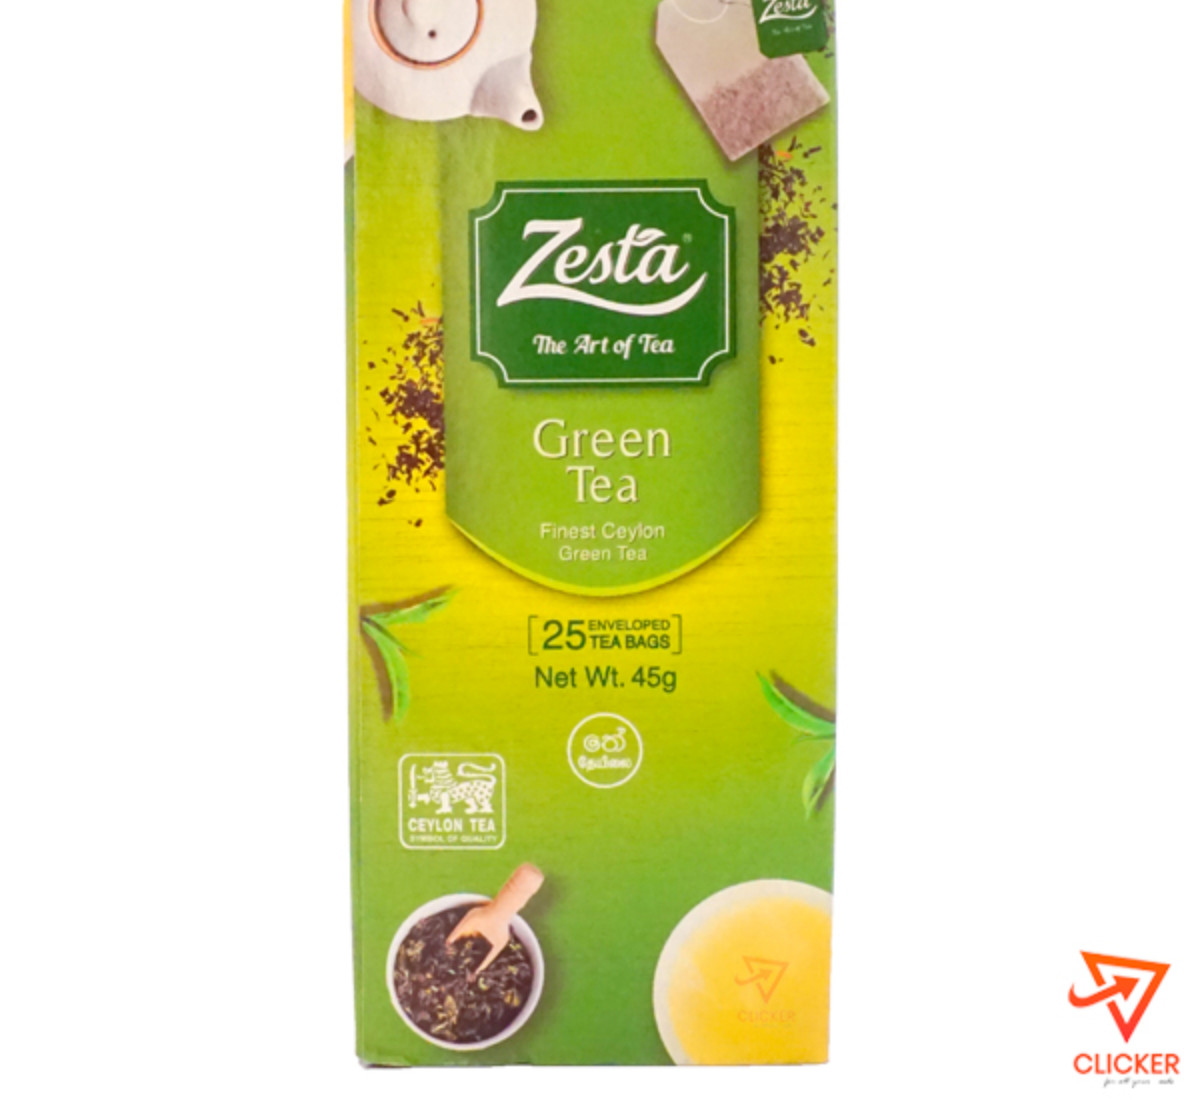 Clicker product 50.5g ZESTA green tea (25 tea bags) 914